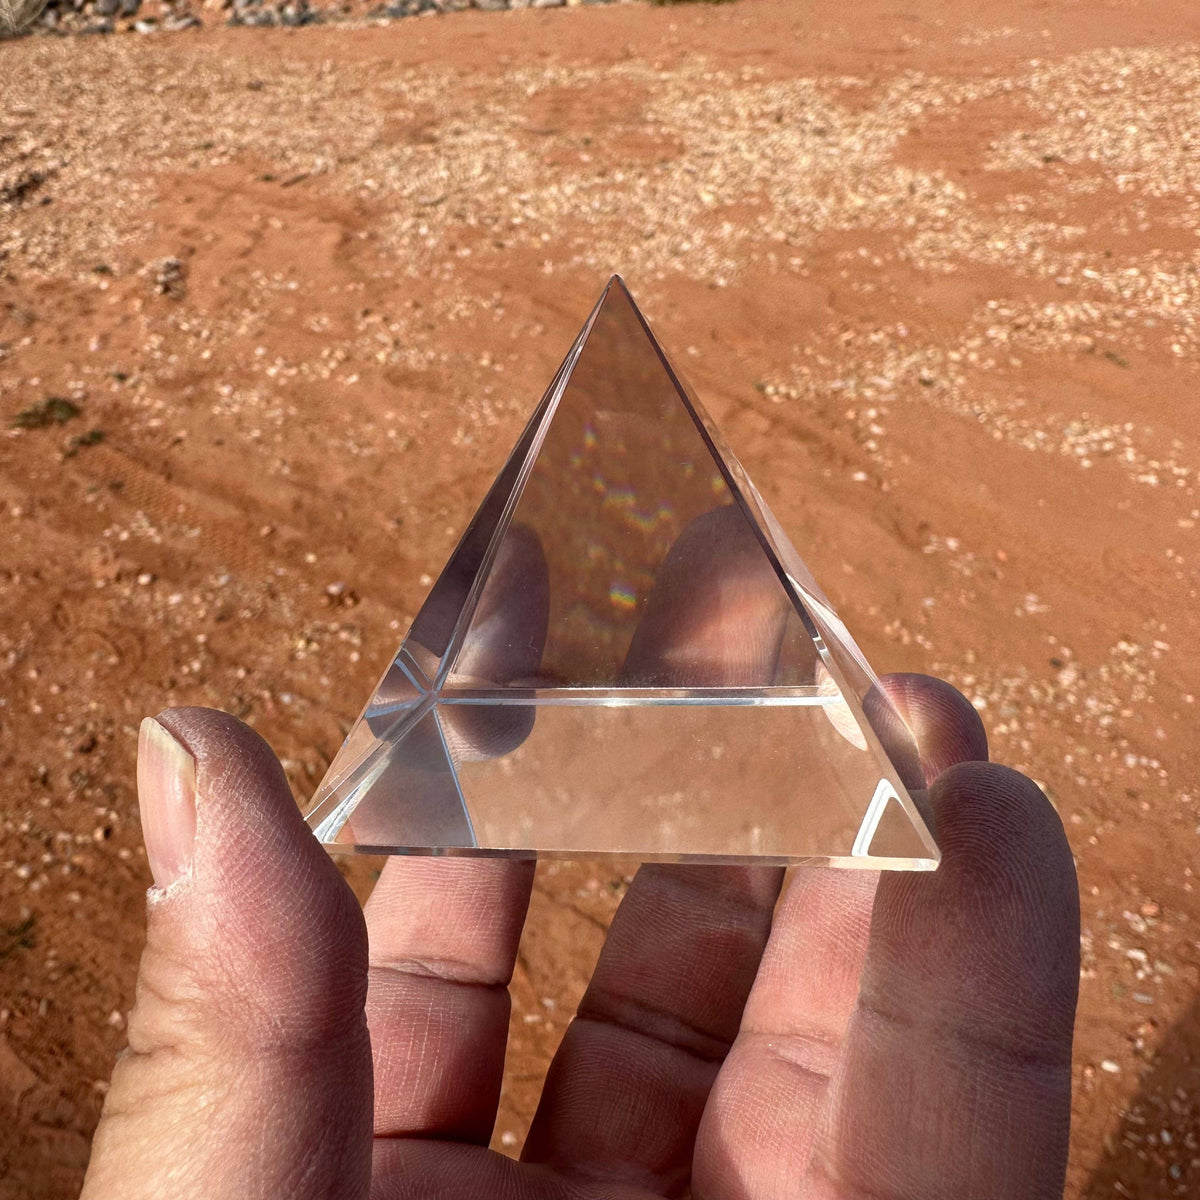 Glass 2 inch Pyramid